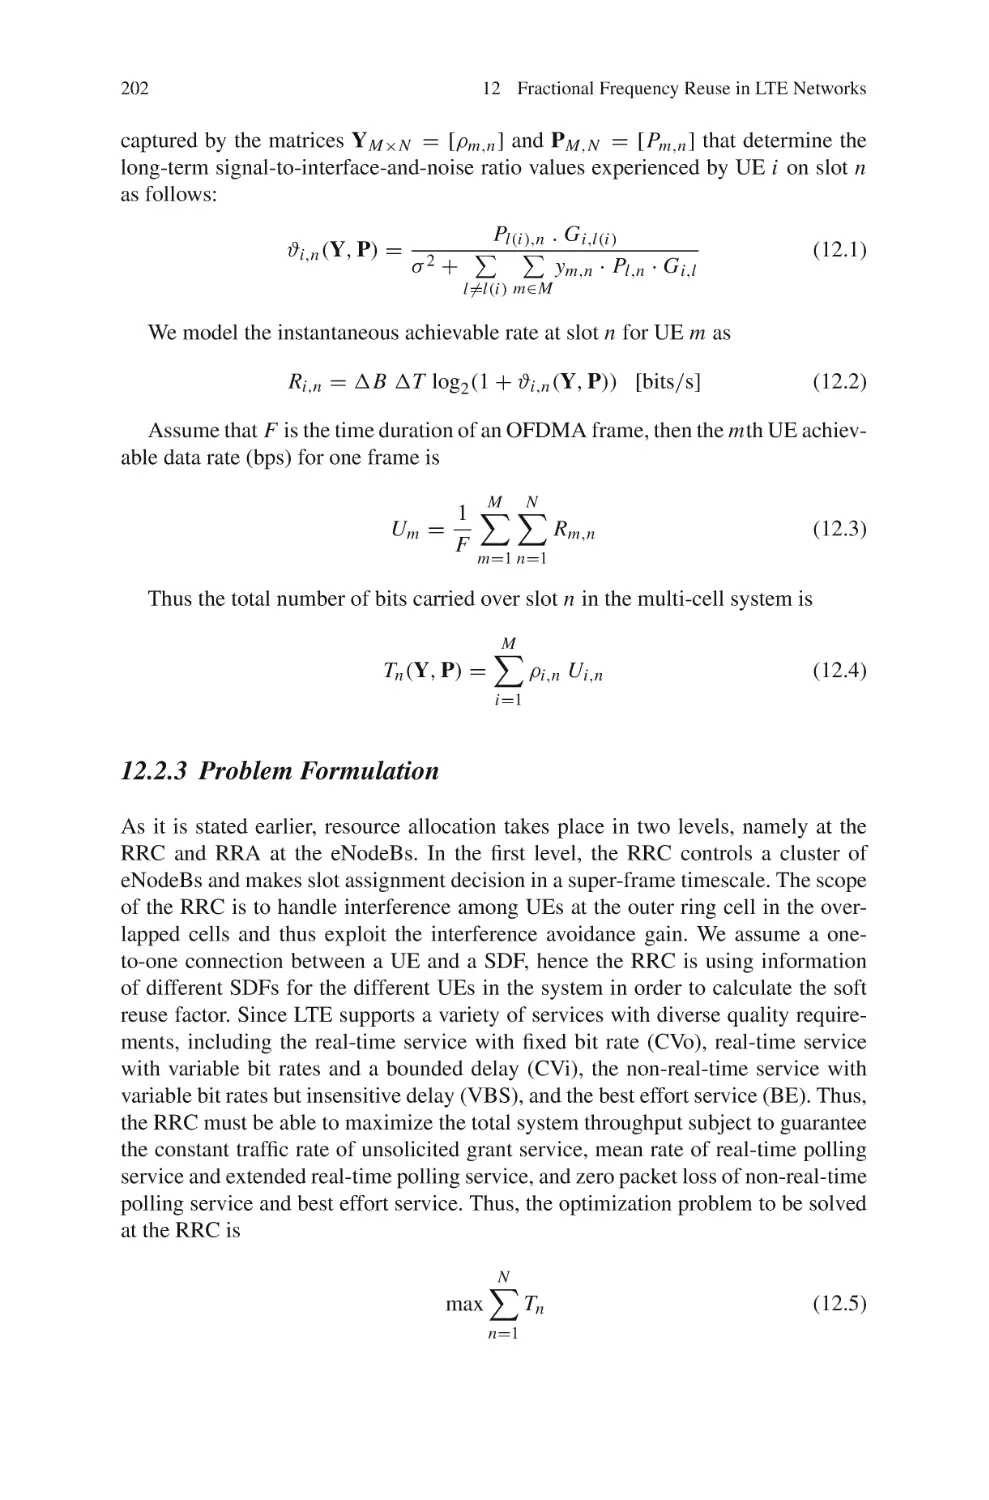 12.2.3  Problem Formulation